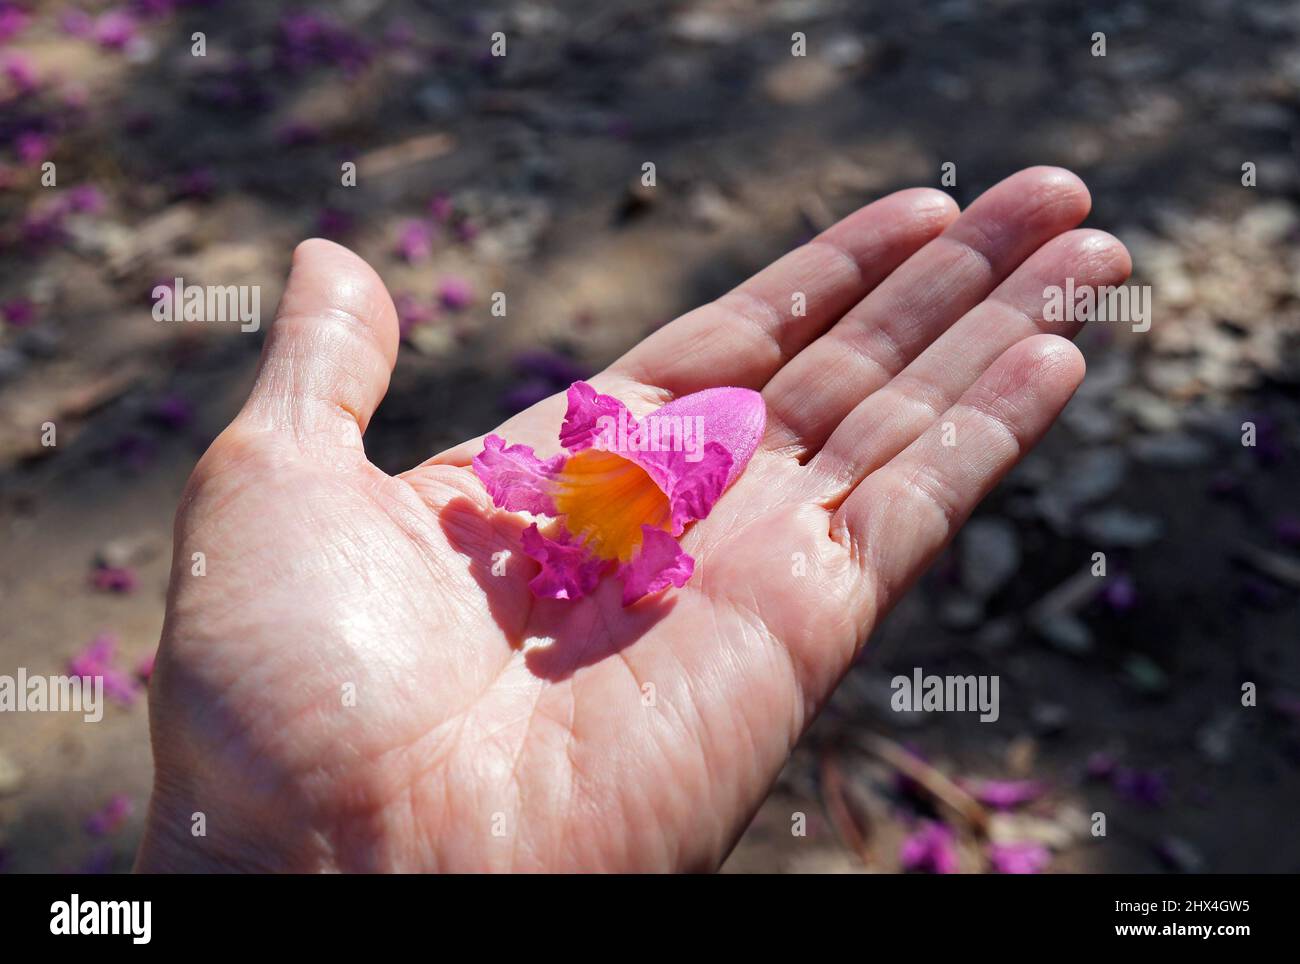 Pink ipe or pink trumpet tree flower, (Handroanthus impetiginosus) on hand Stock Photo